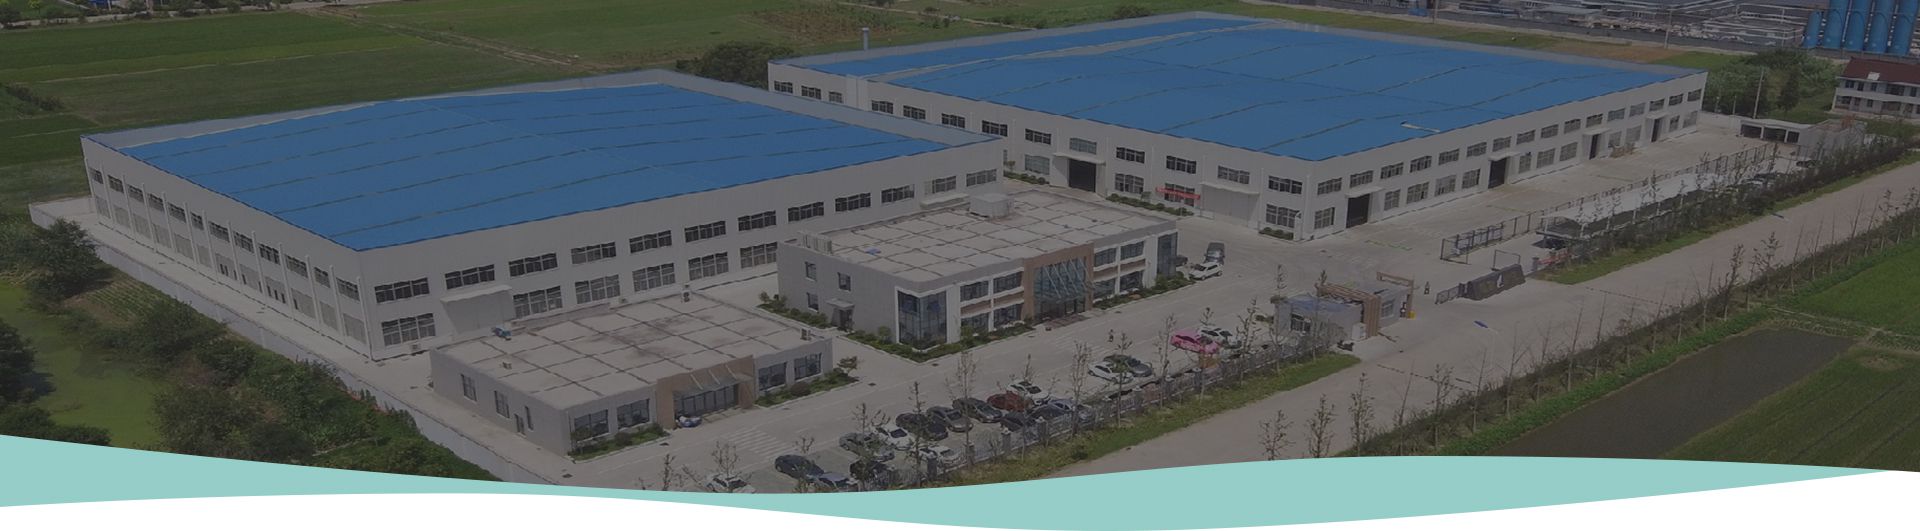 Nantong Healthcare Machinery Co., Ltd.